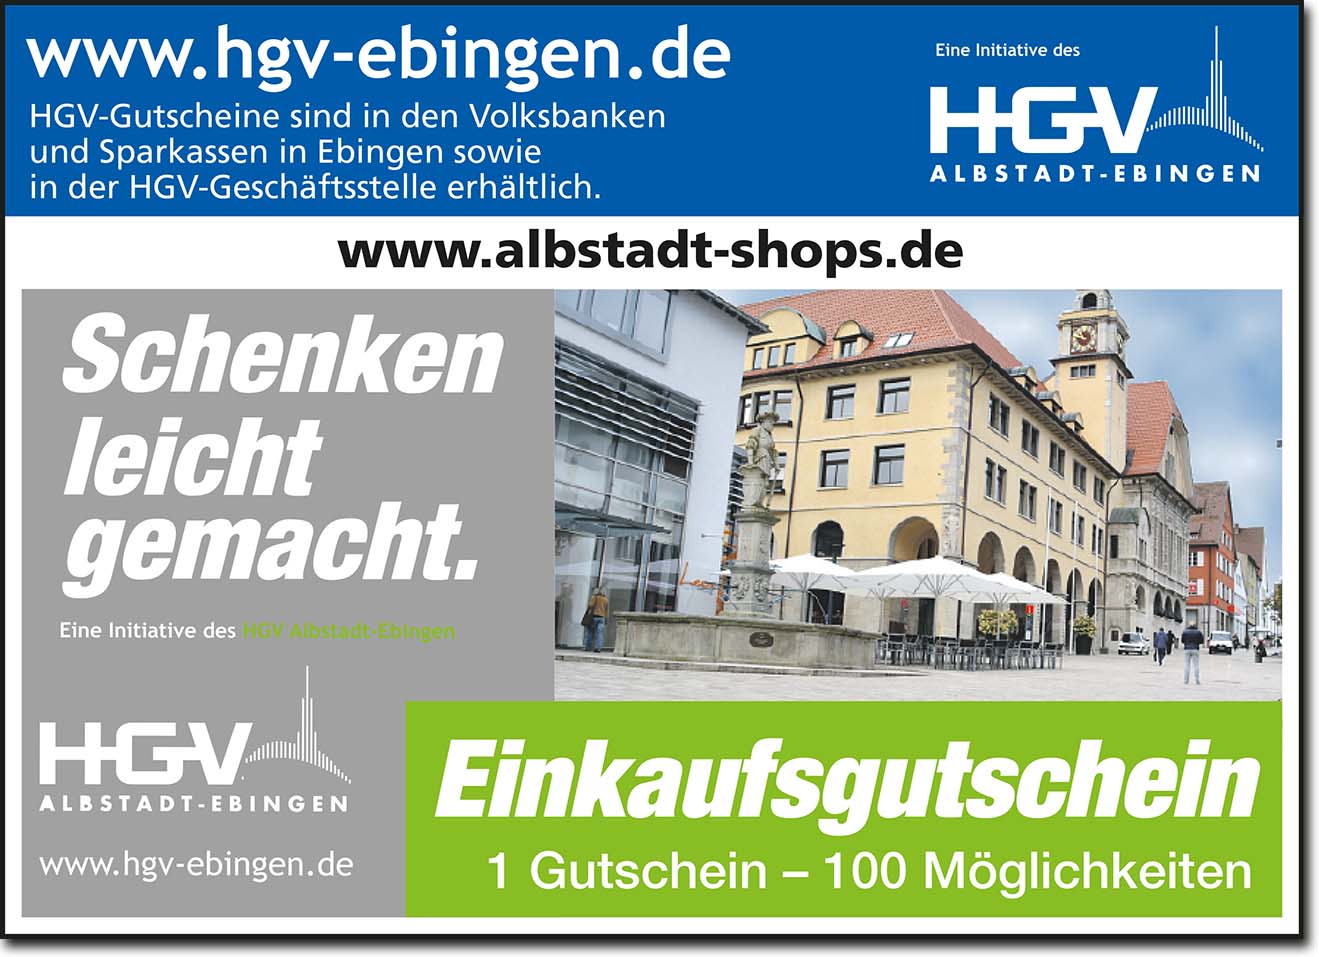 Handels- und Gewerbeverein Albstadt Ebingen e.V.